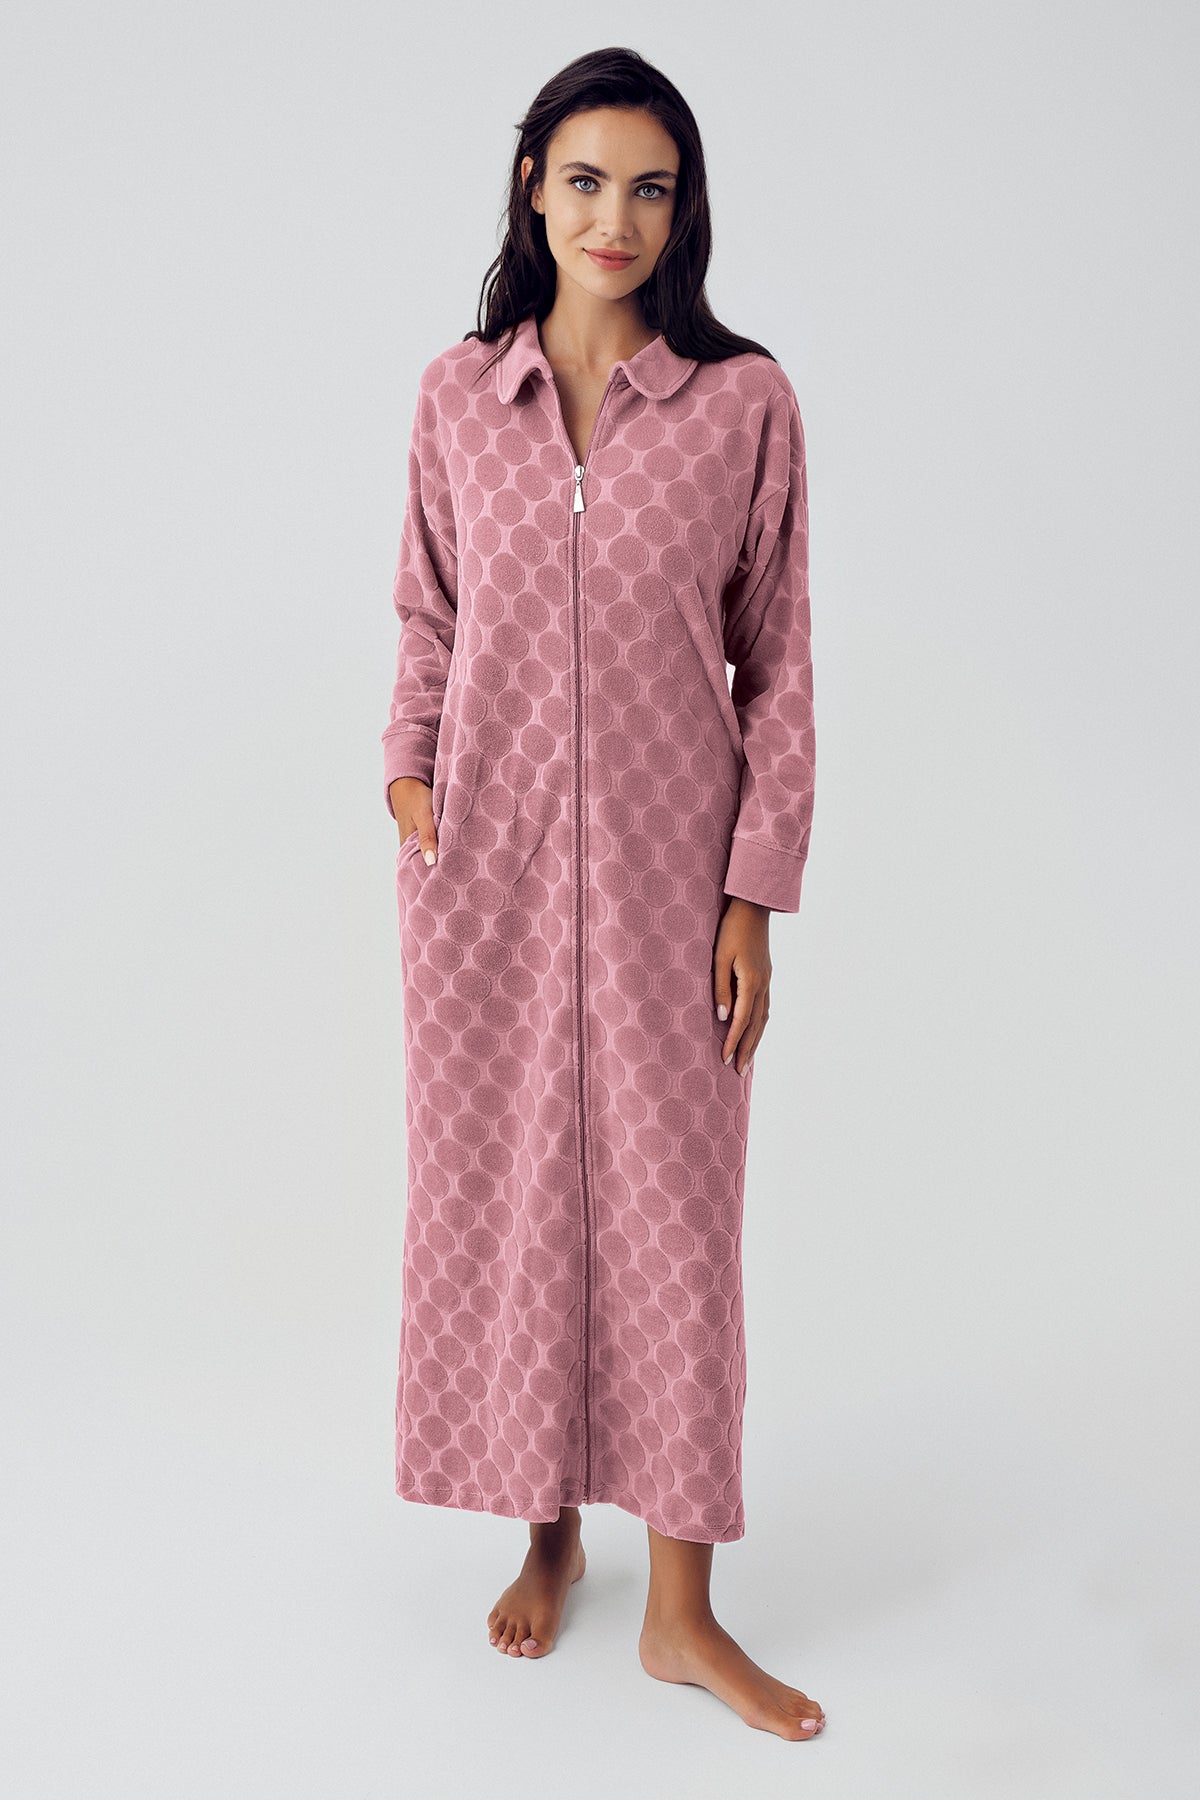 Terry Jacquard Maternity & Nursing Nightgown Dried Rose - 15100